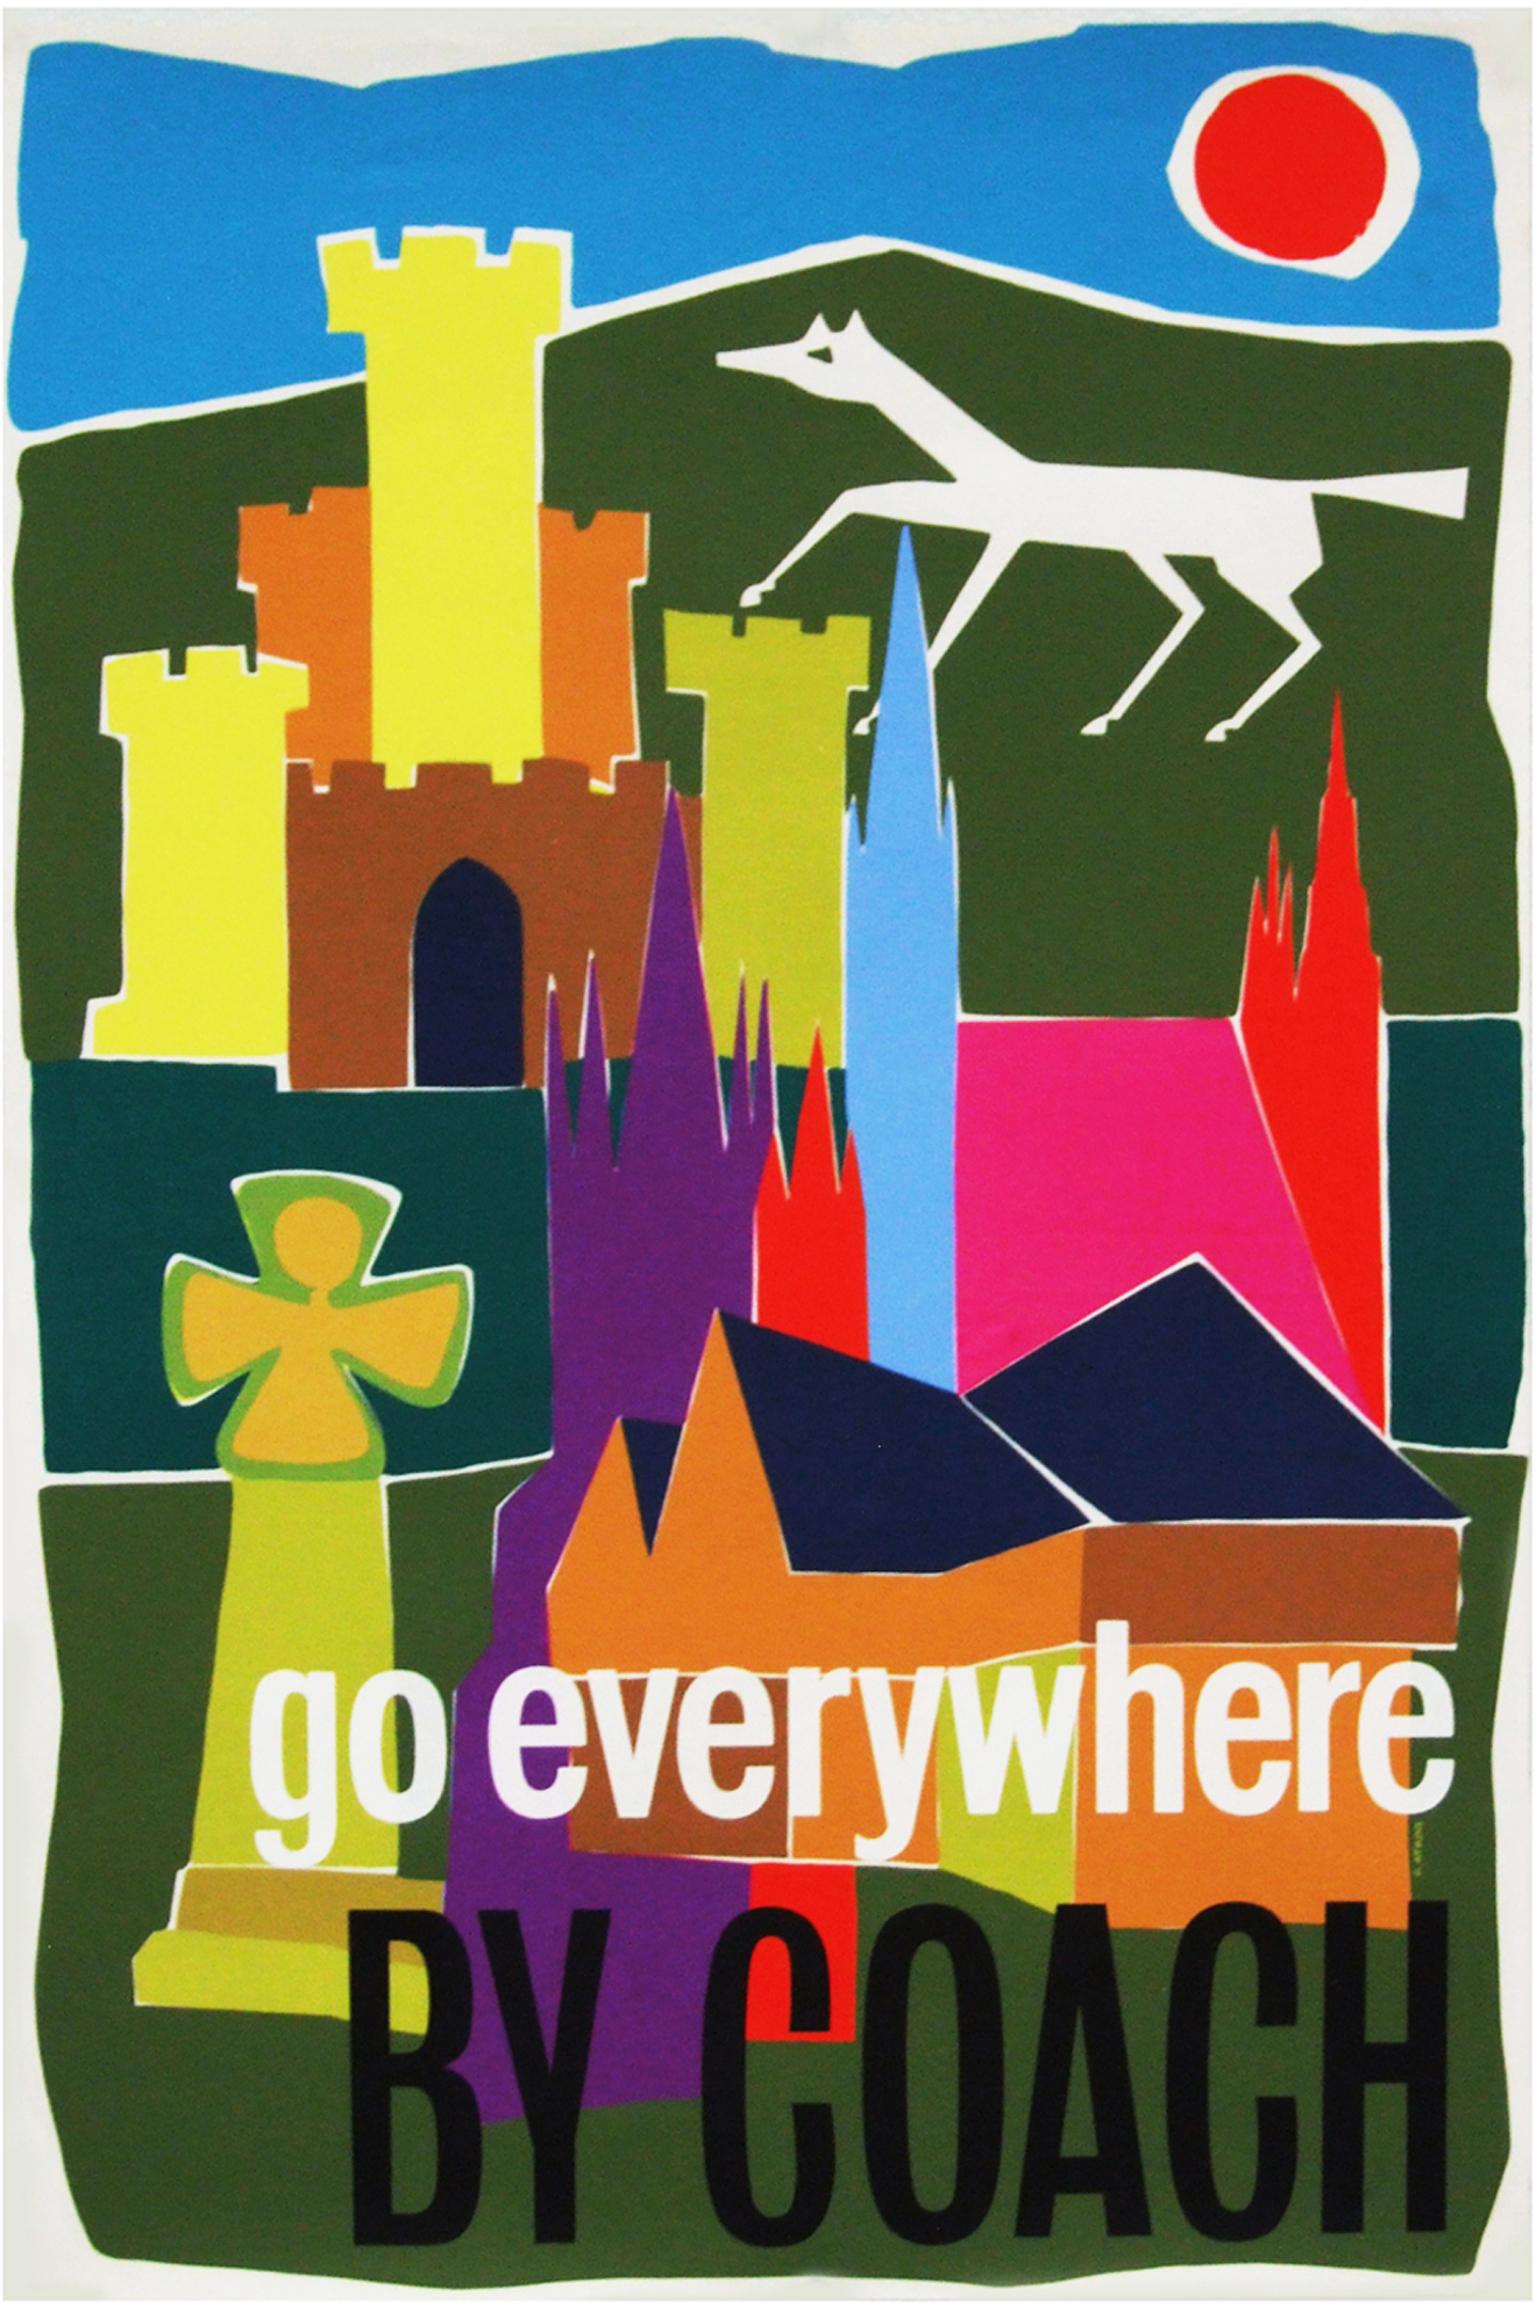 1960s British Coach Travel Poster Pop Art Illustration Design In Good Condition For Sale In Nottingham, Nottinghamshire